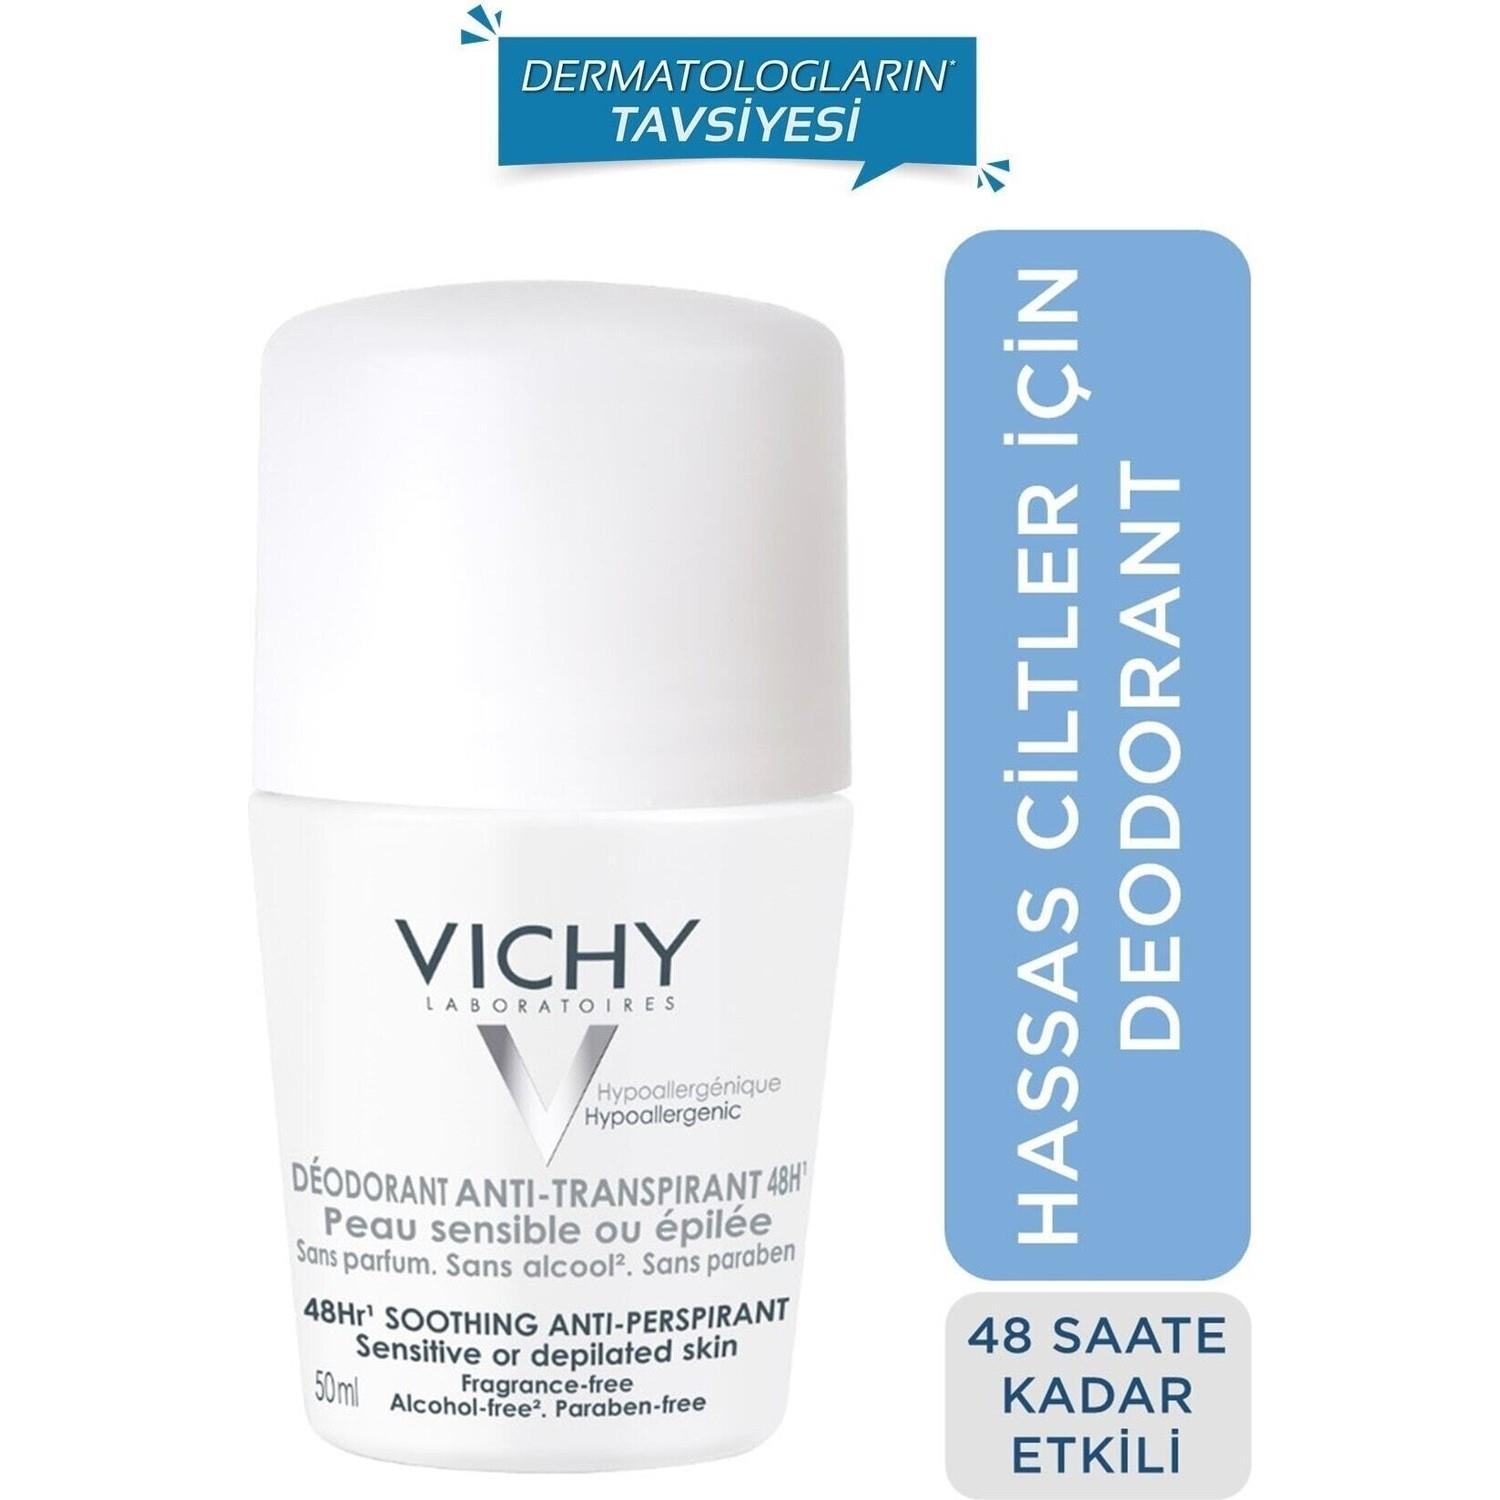 Vichy Terleme Karşıtı Deodorant 50ml - 3